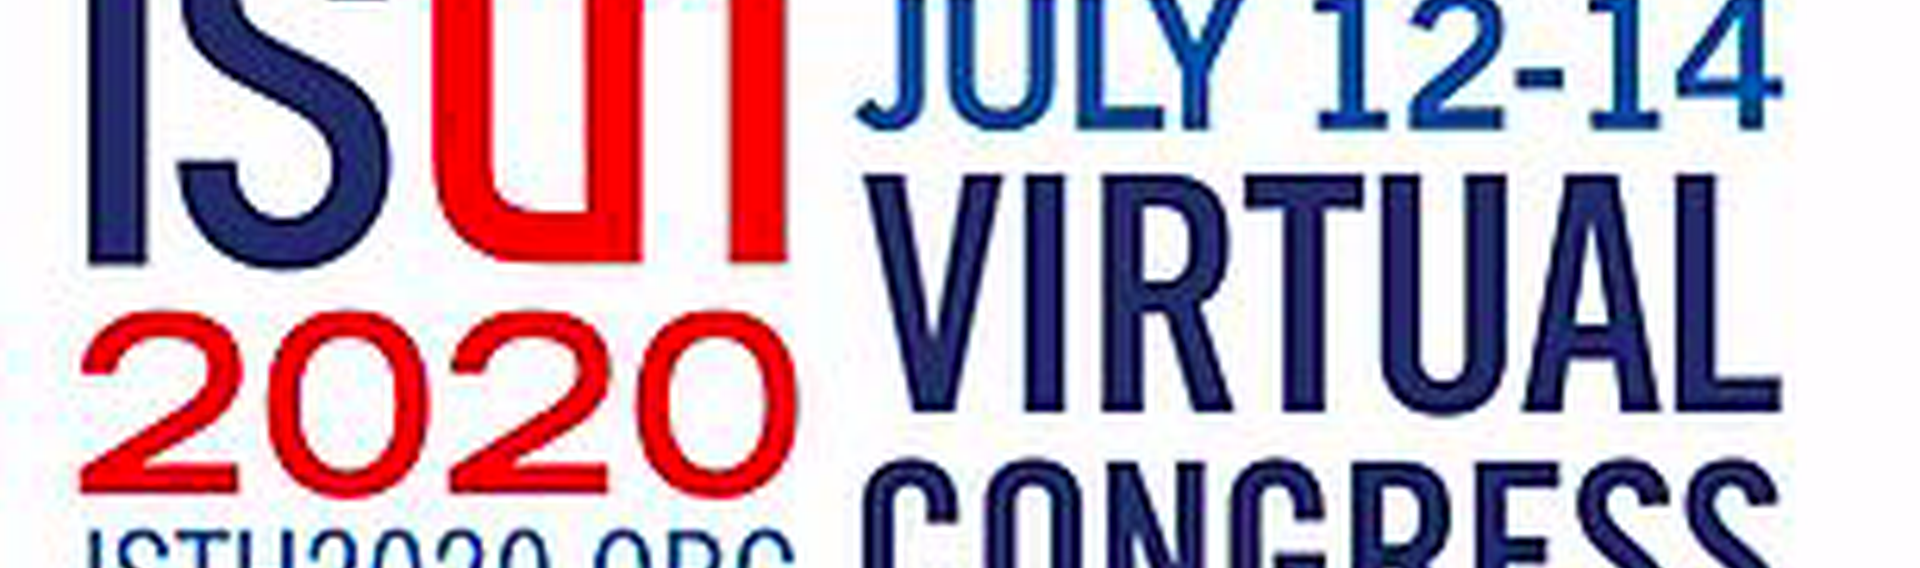 ISTH 2020 Virtual Congress Image